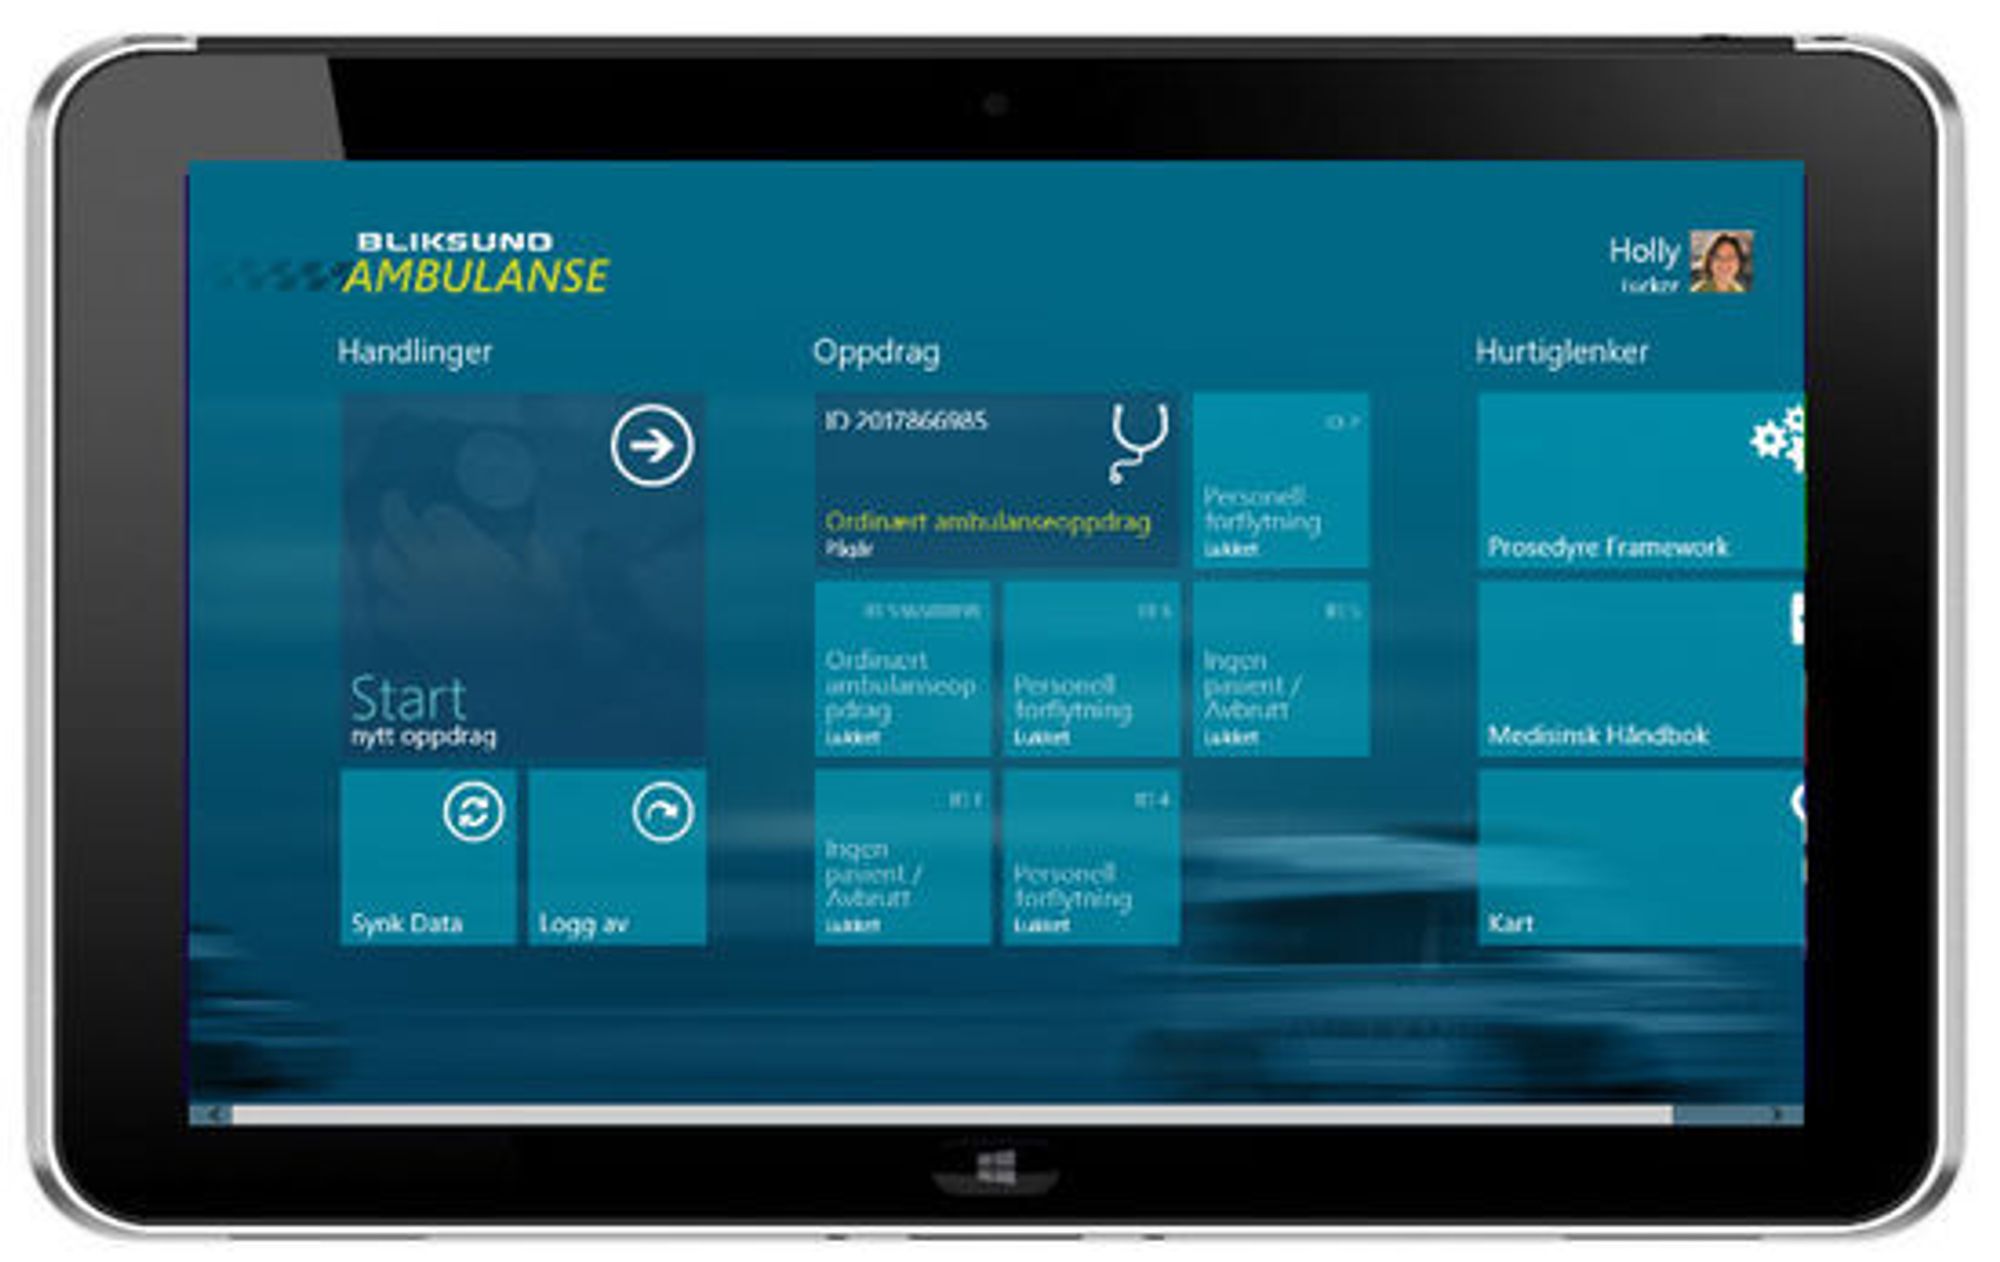 Bliksunds Ambulanse-app.